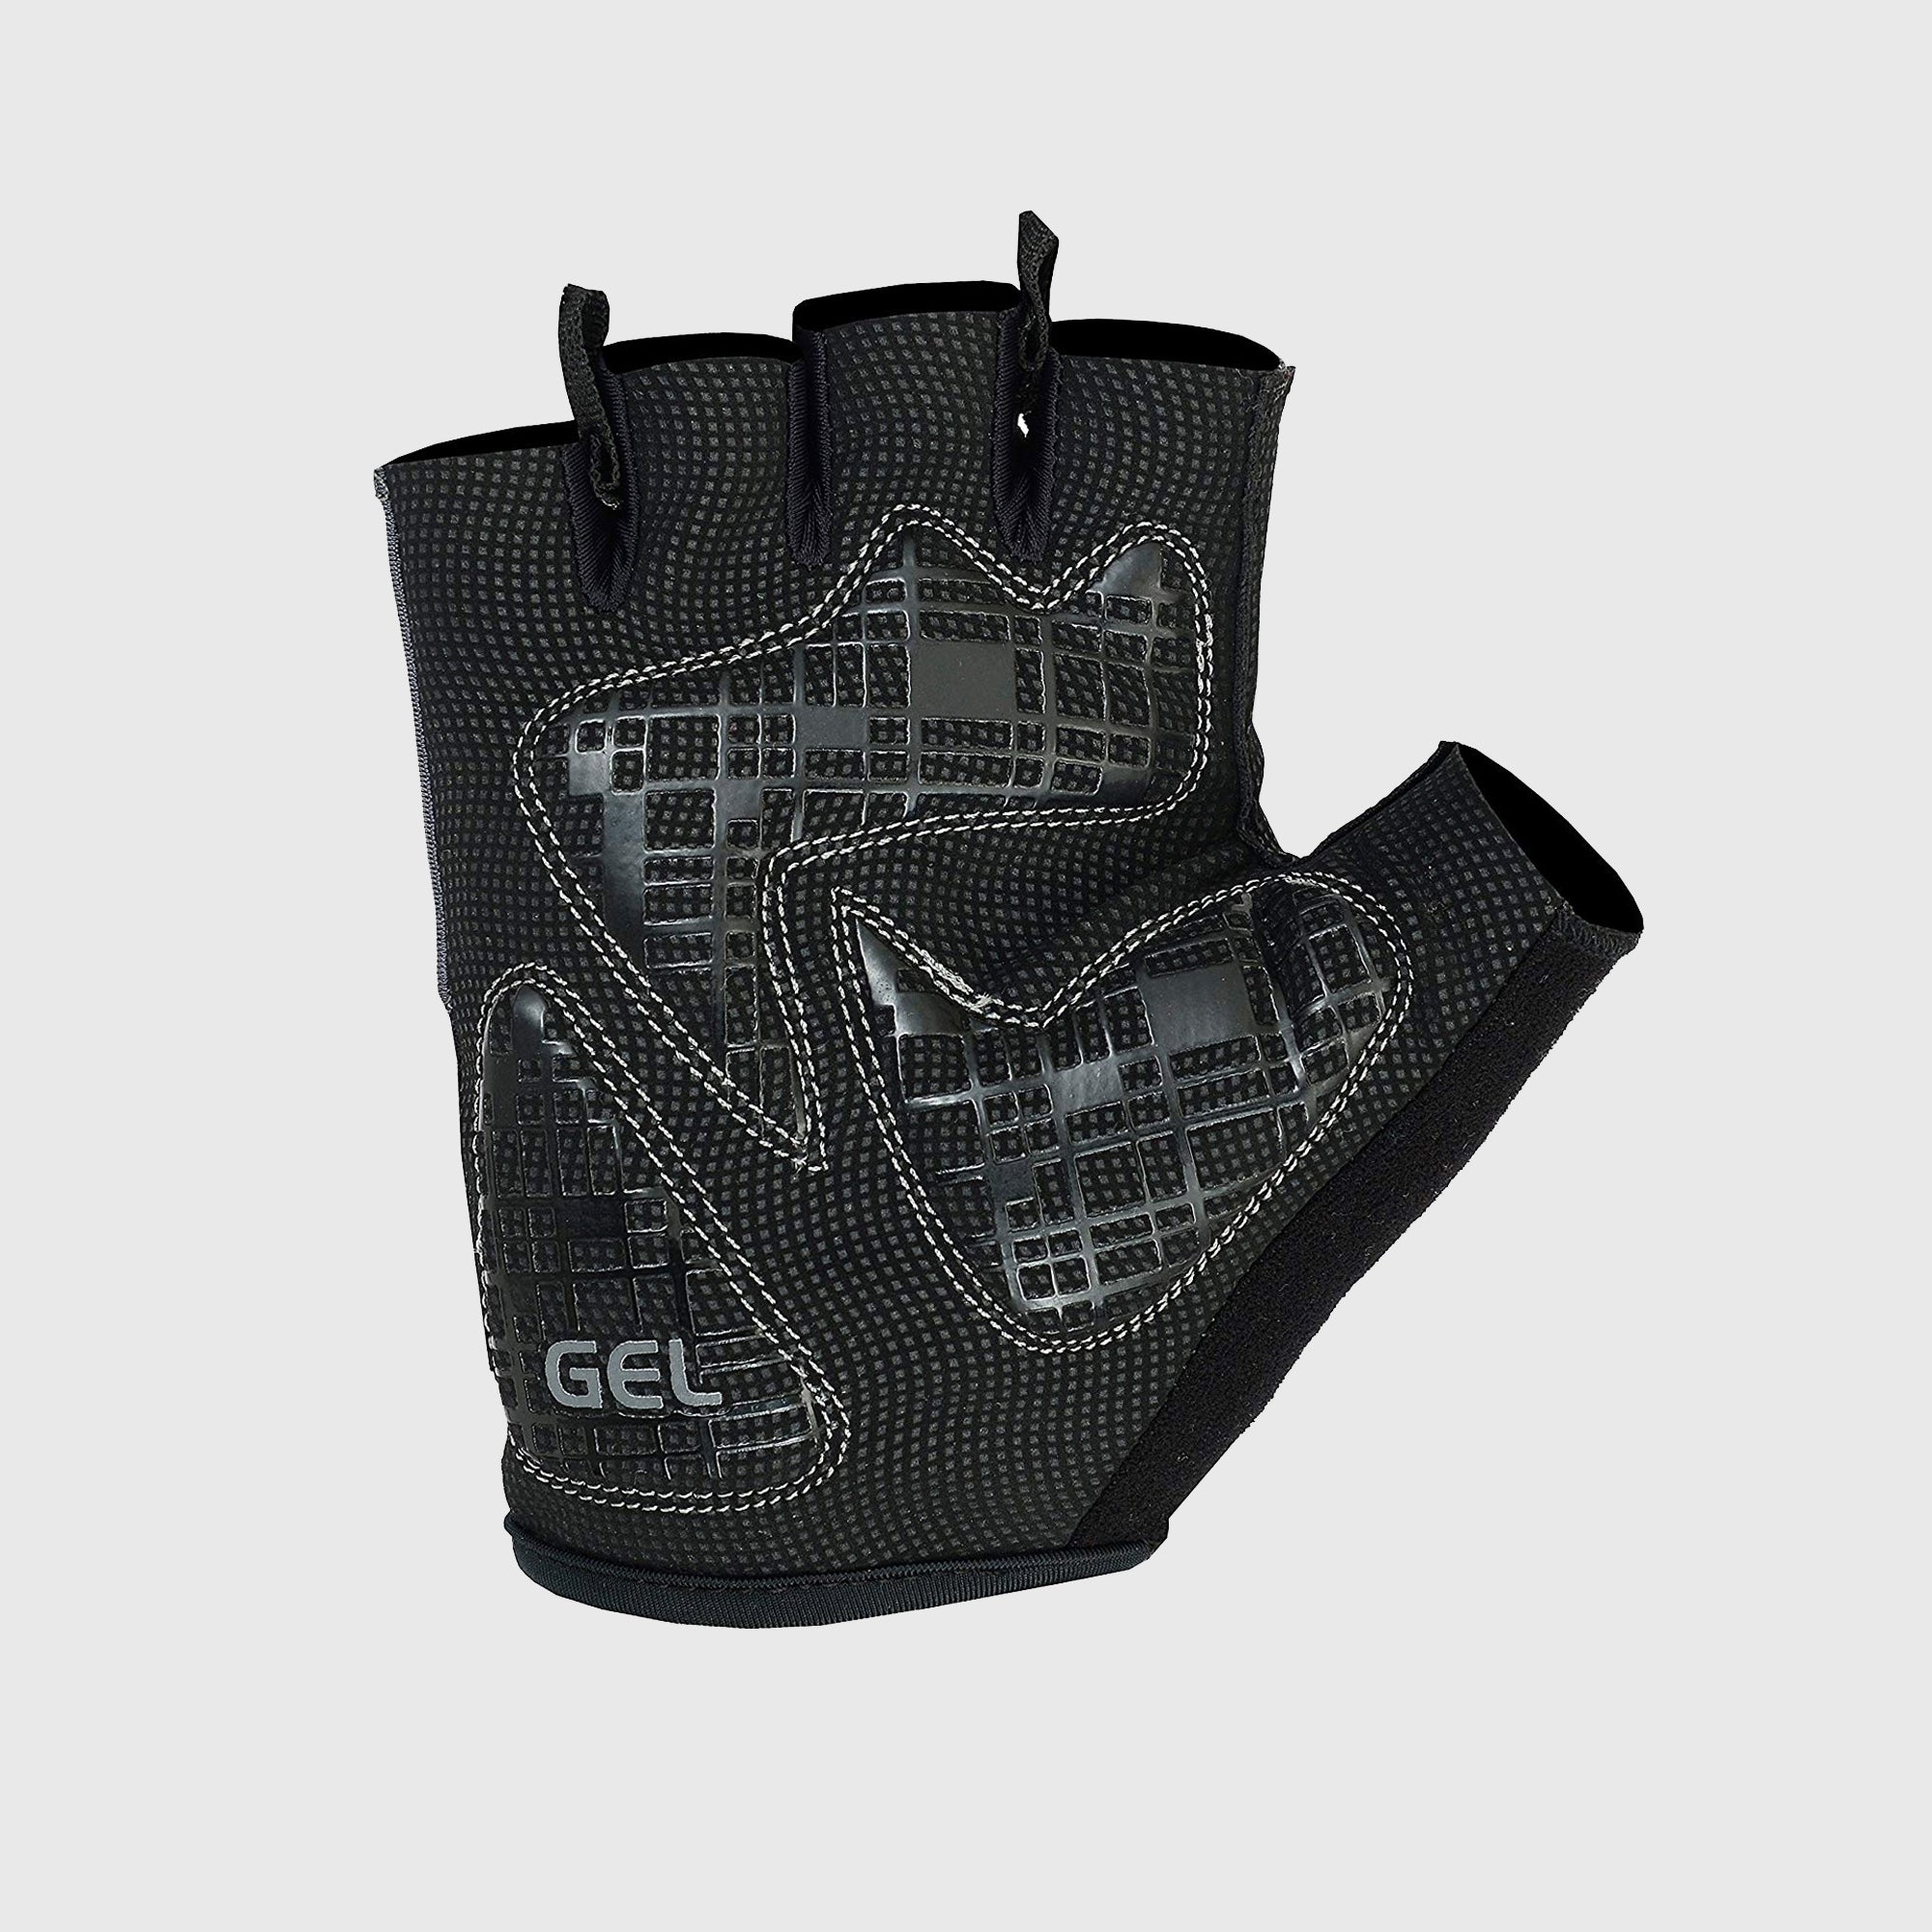 Fdx Apex Grey Short Finger Summer Cycling Gloves